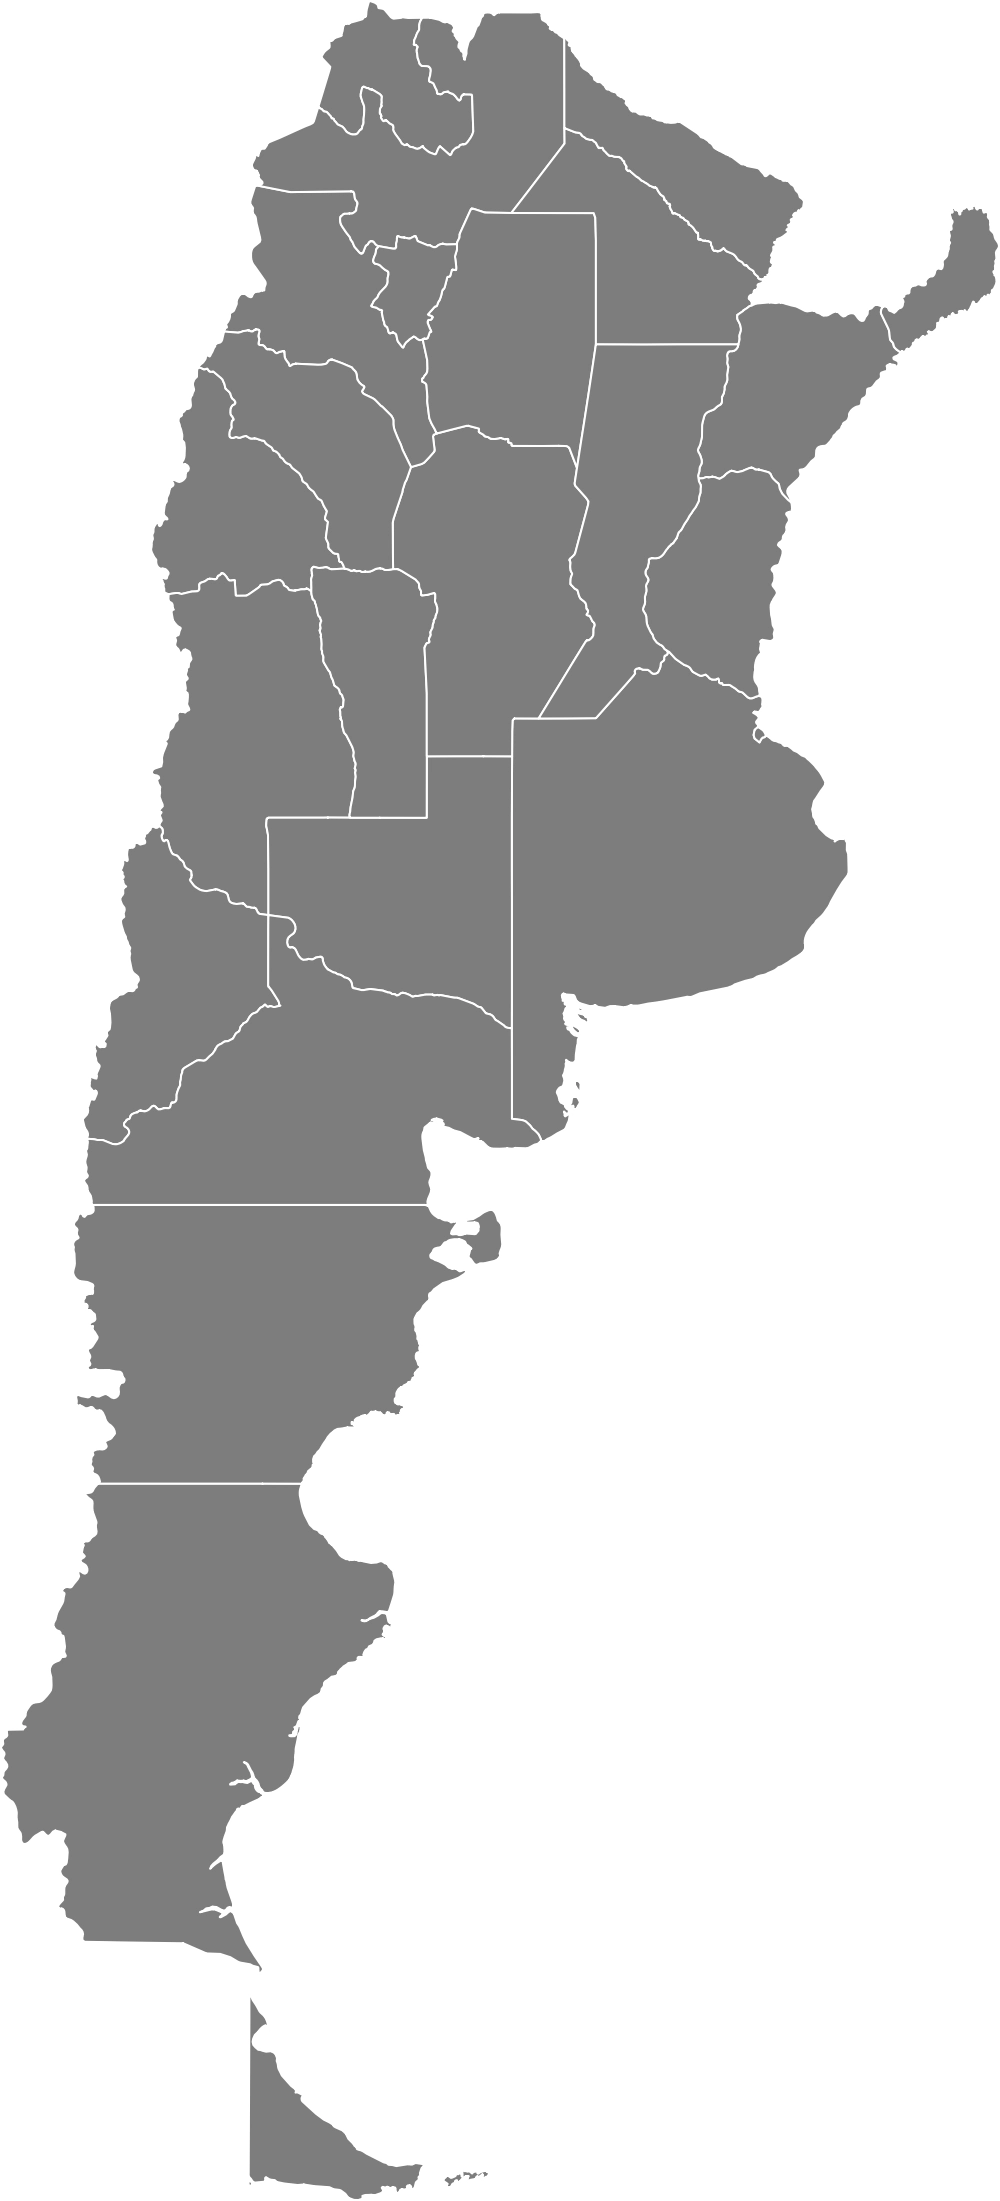 ARGENTYNA